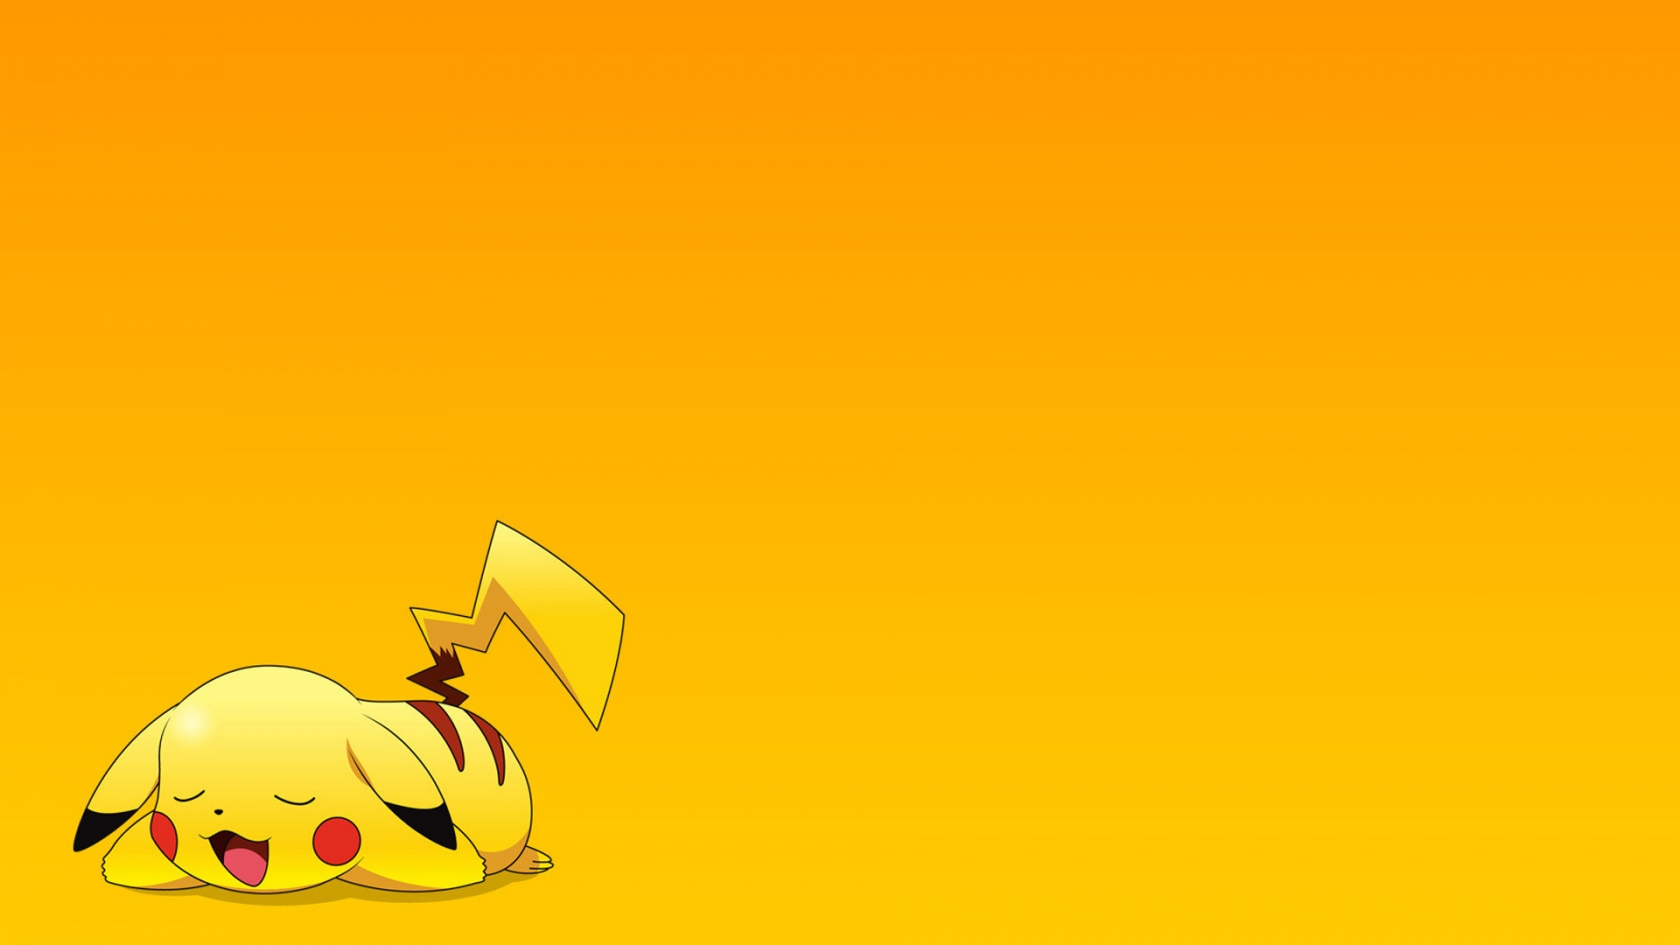 Pikachu for 1680 x 945 HDTV resolution